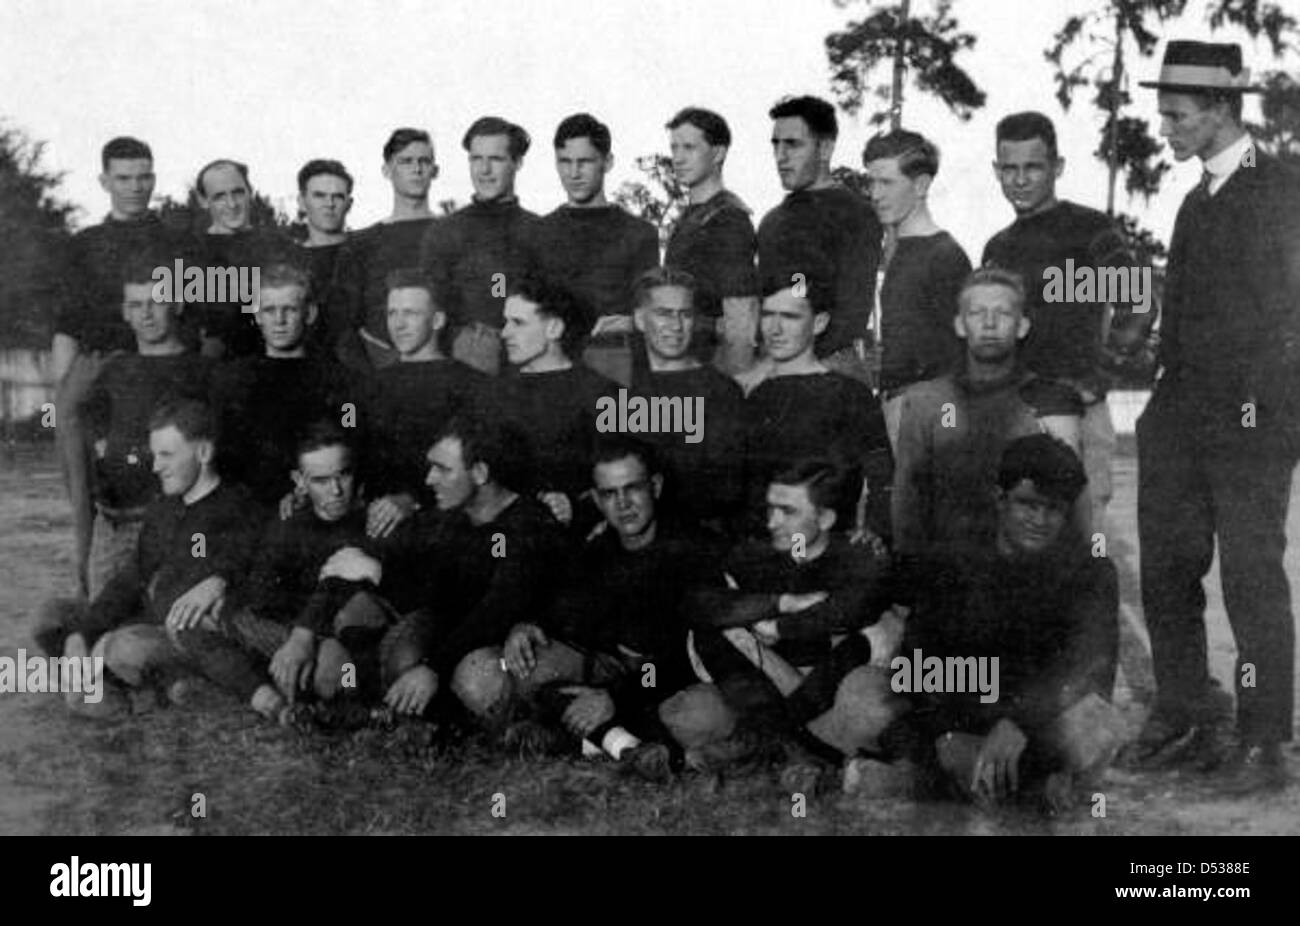 Group portrait of the University of Florida football team: Gainesville, Florida Stock Photo